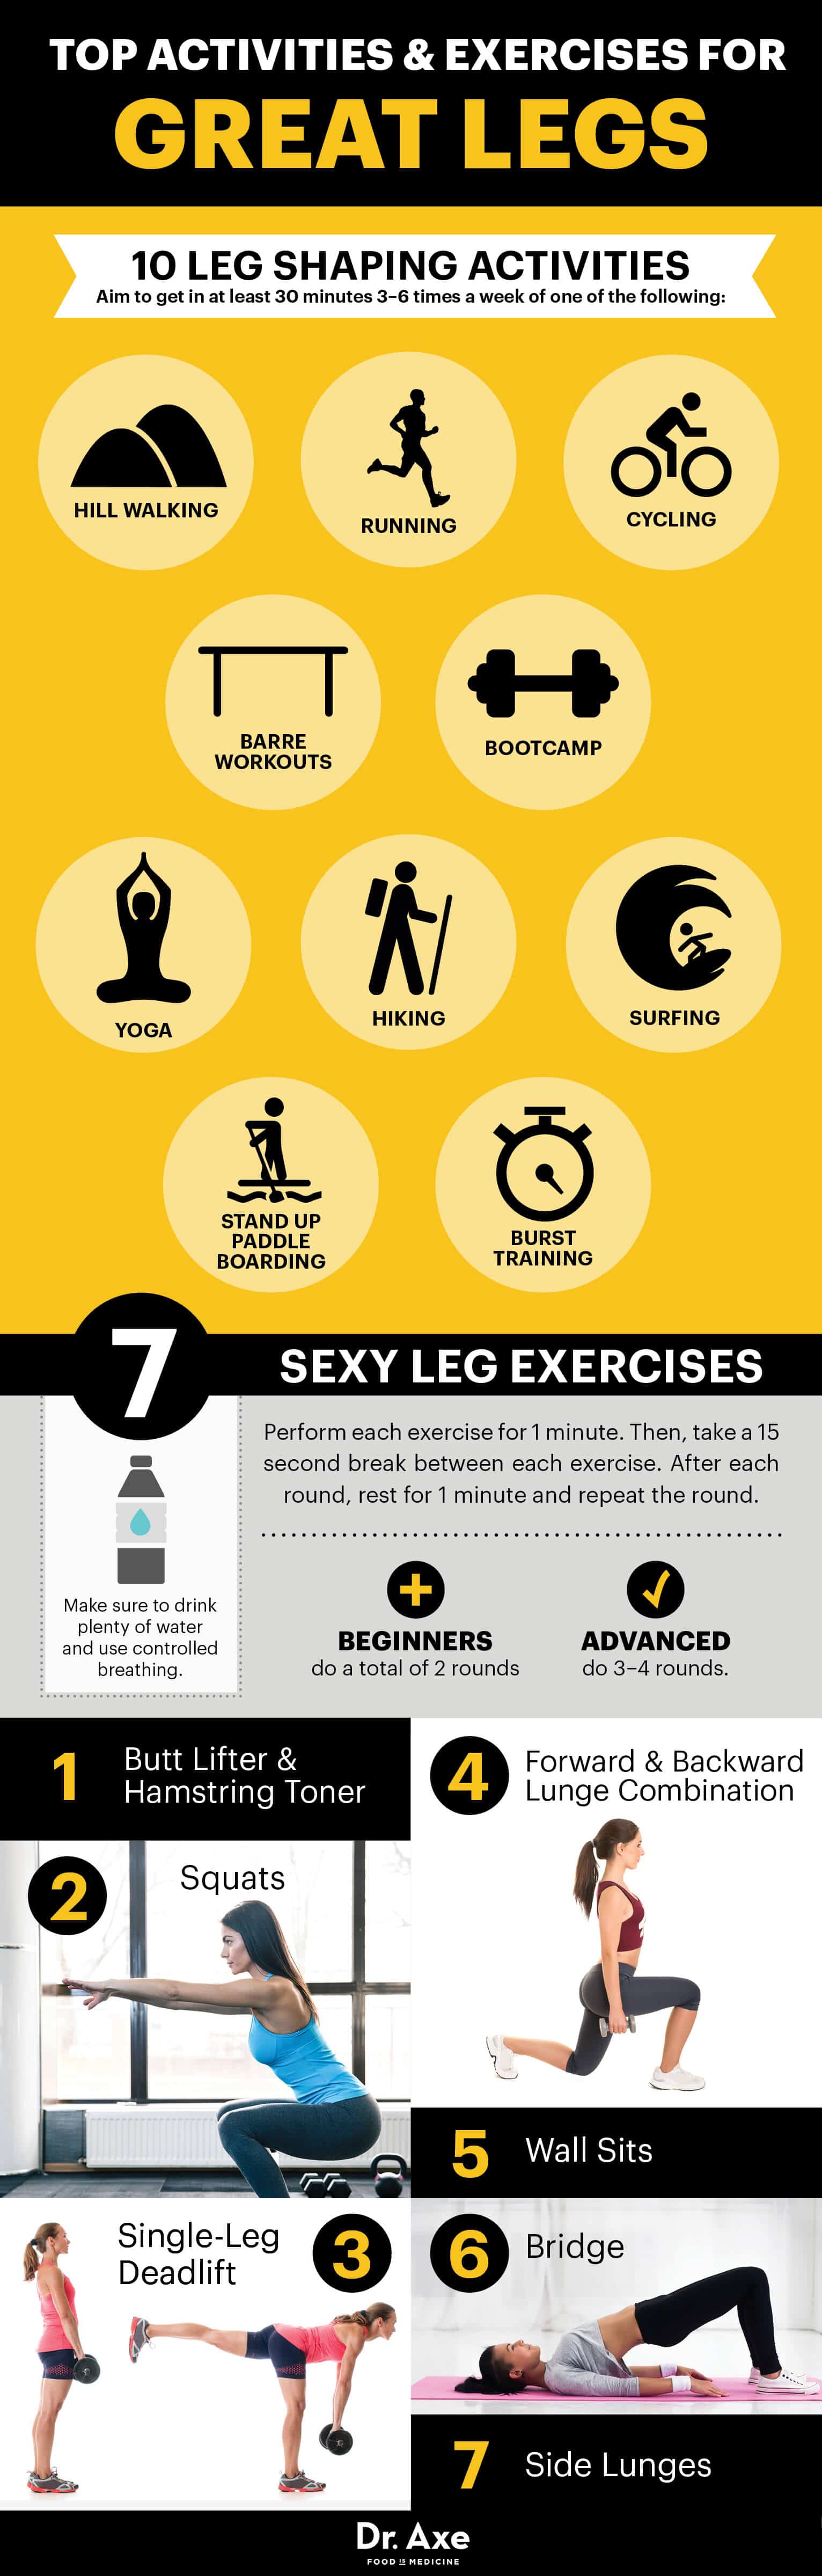 Leg workout - Dr. Axe